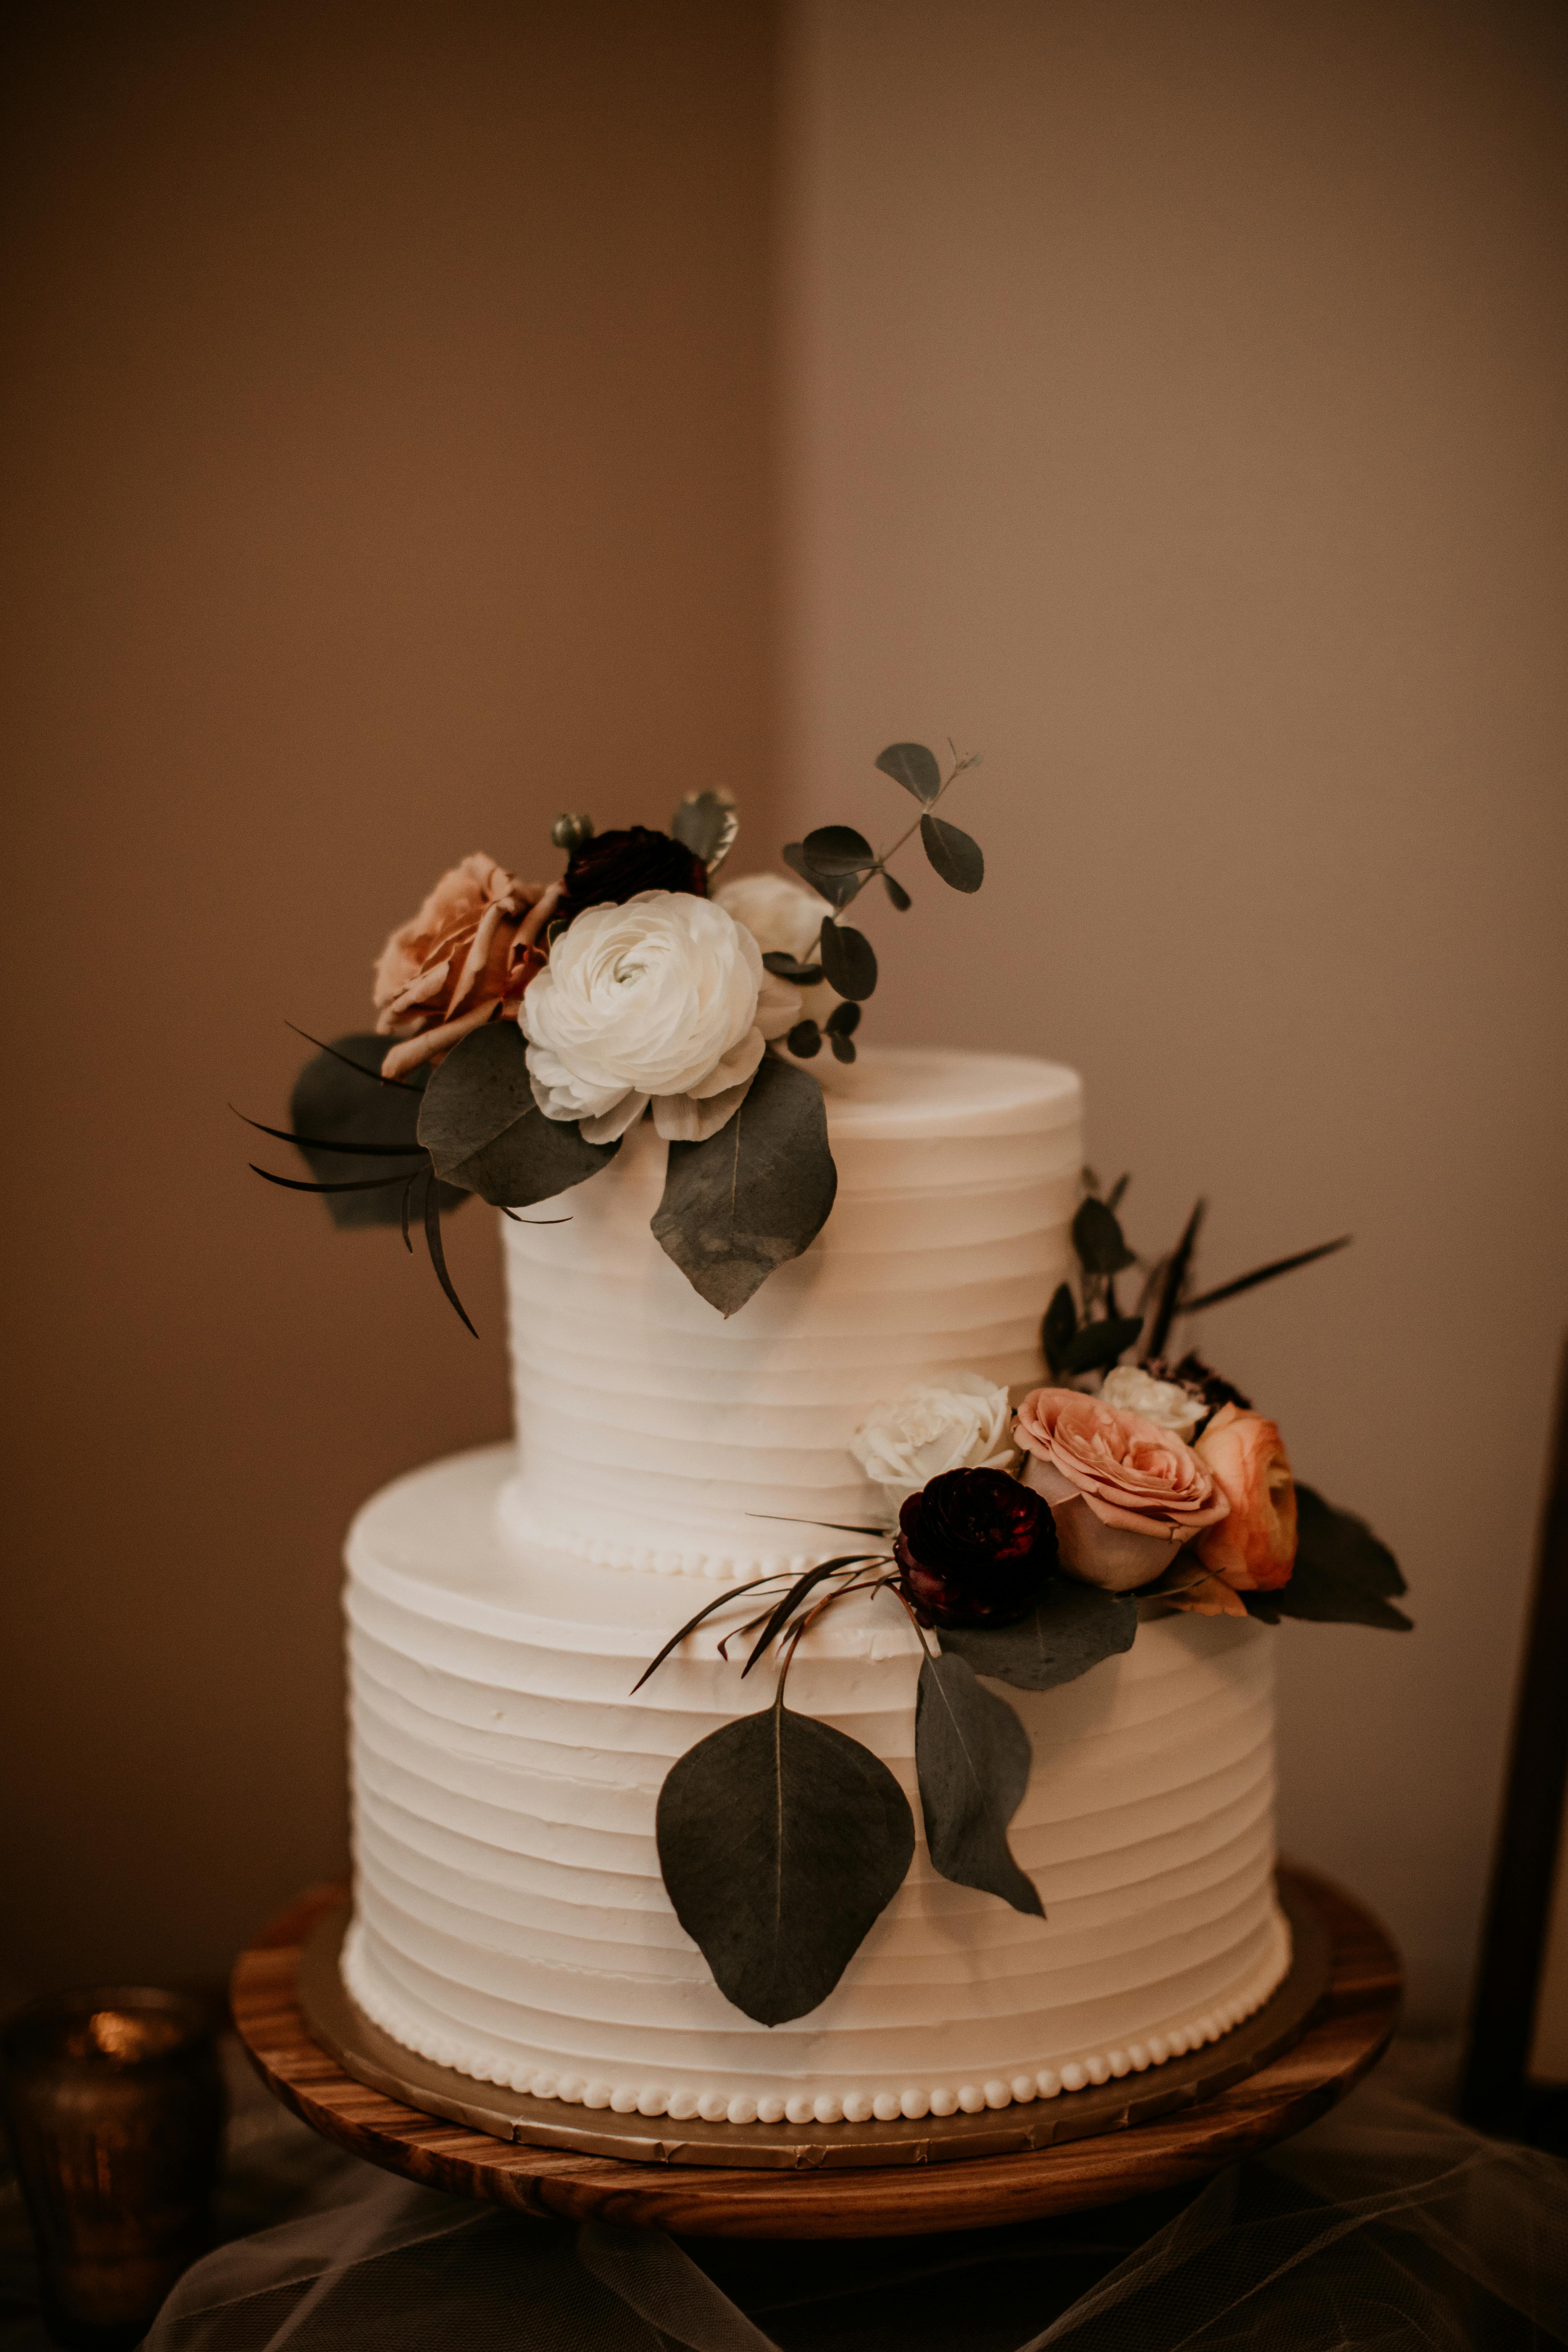 A wedding cake | Source: Pexels